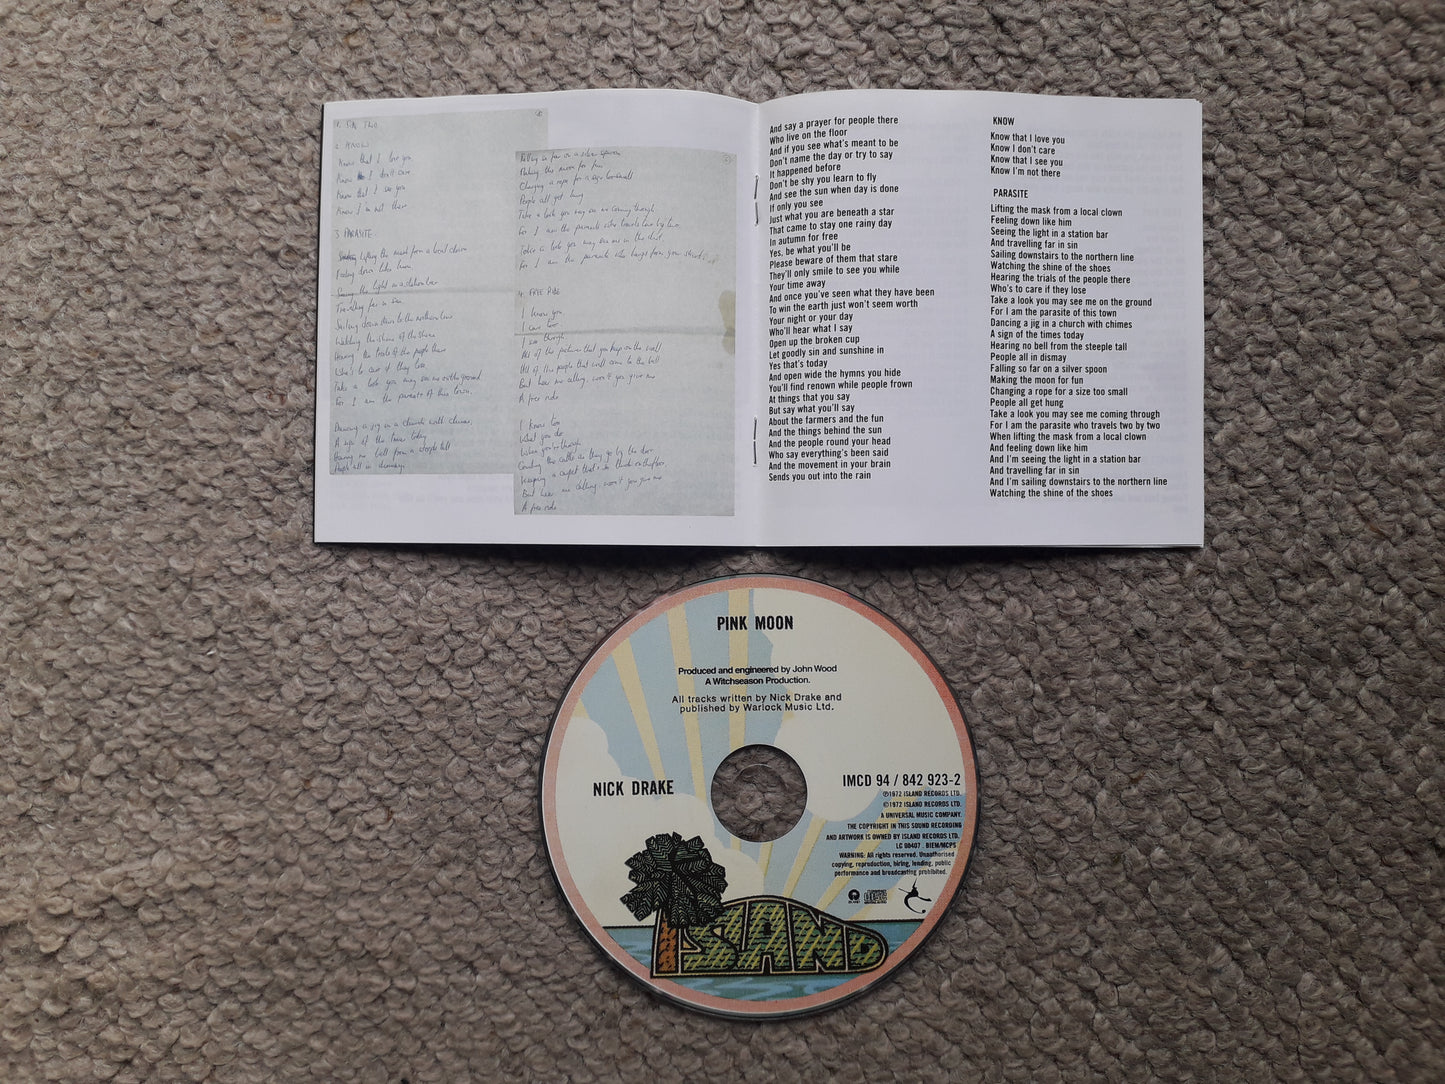 Nick Drake-Pink Moon CD (IMCD 94/842 923-2)